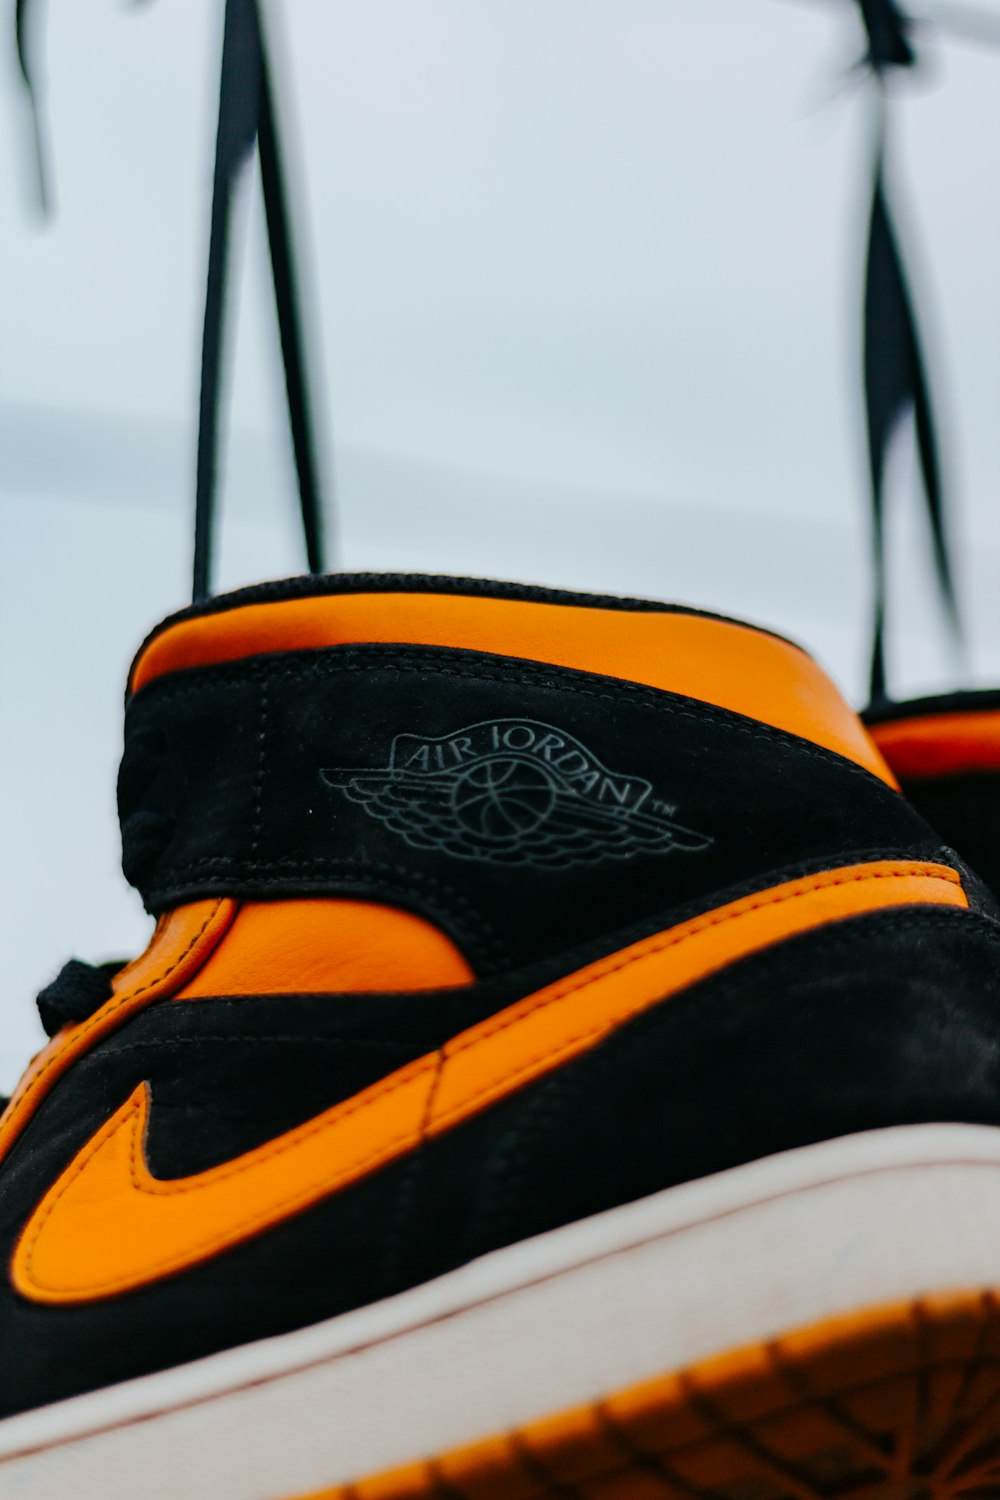 Black orange and white nike high top sneakers photo – Free Footwear Image  on Unsplash